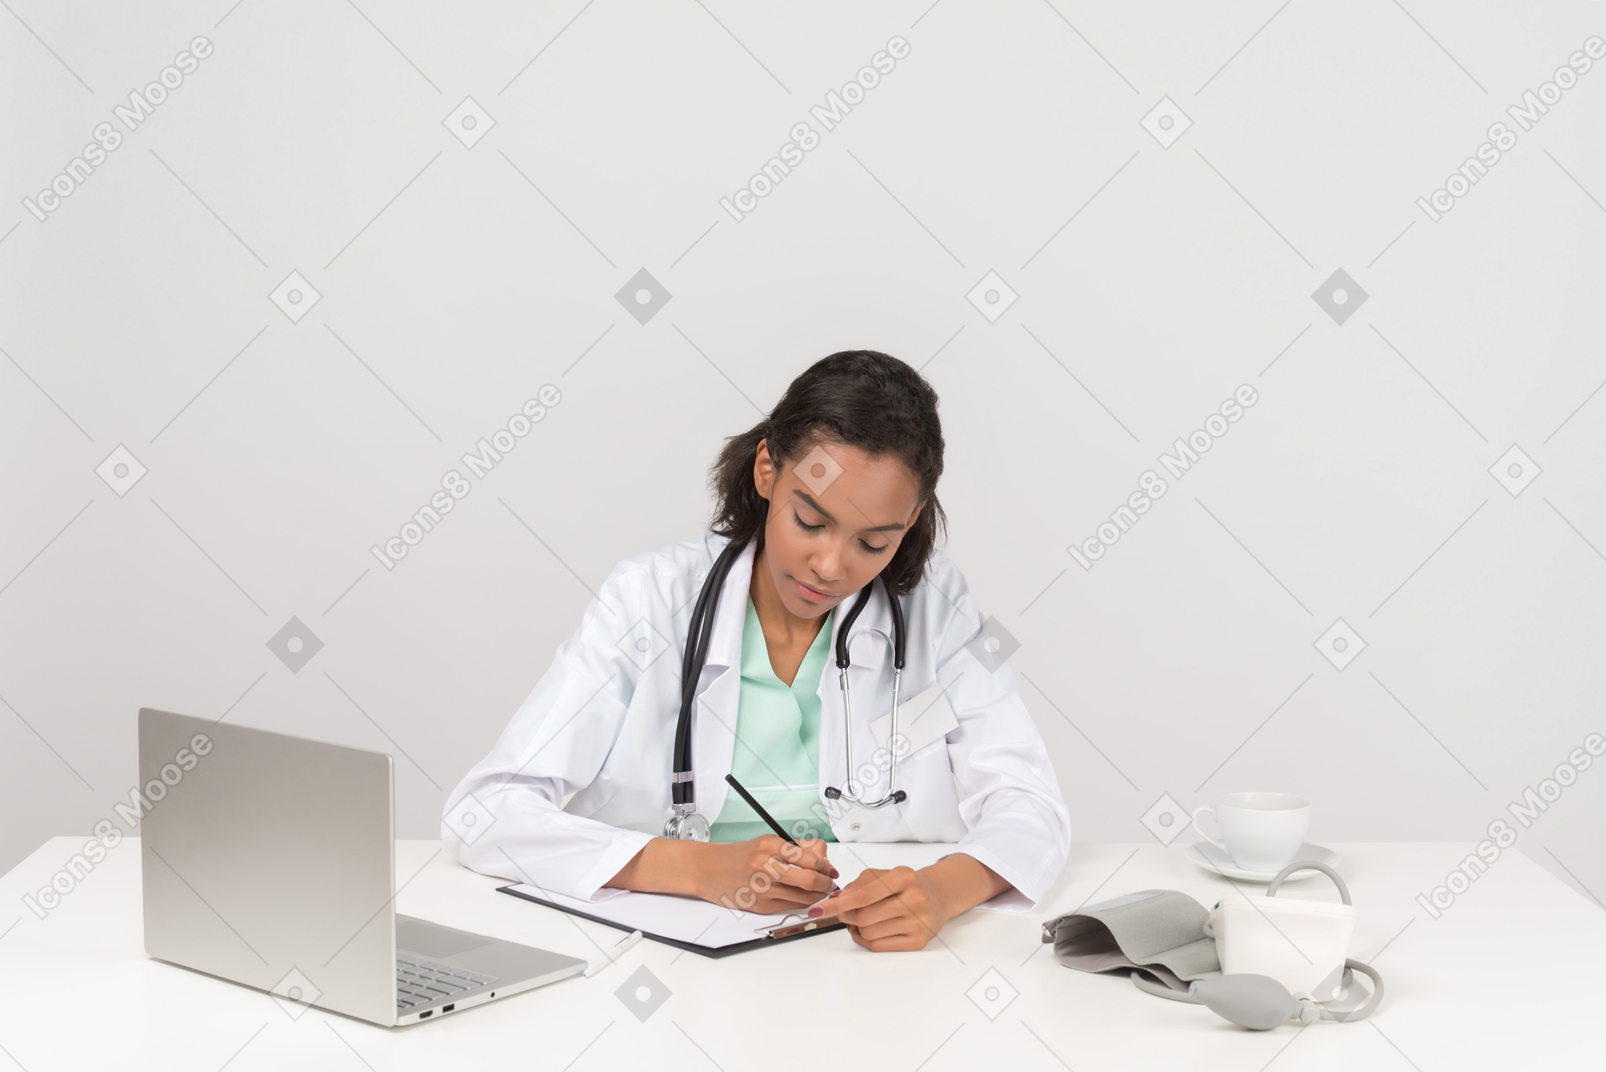 Doctor's handwritten prescription